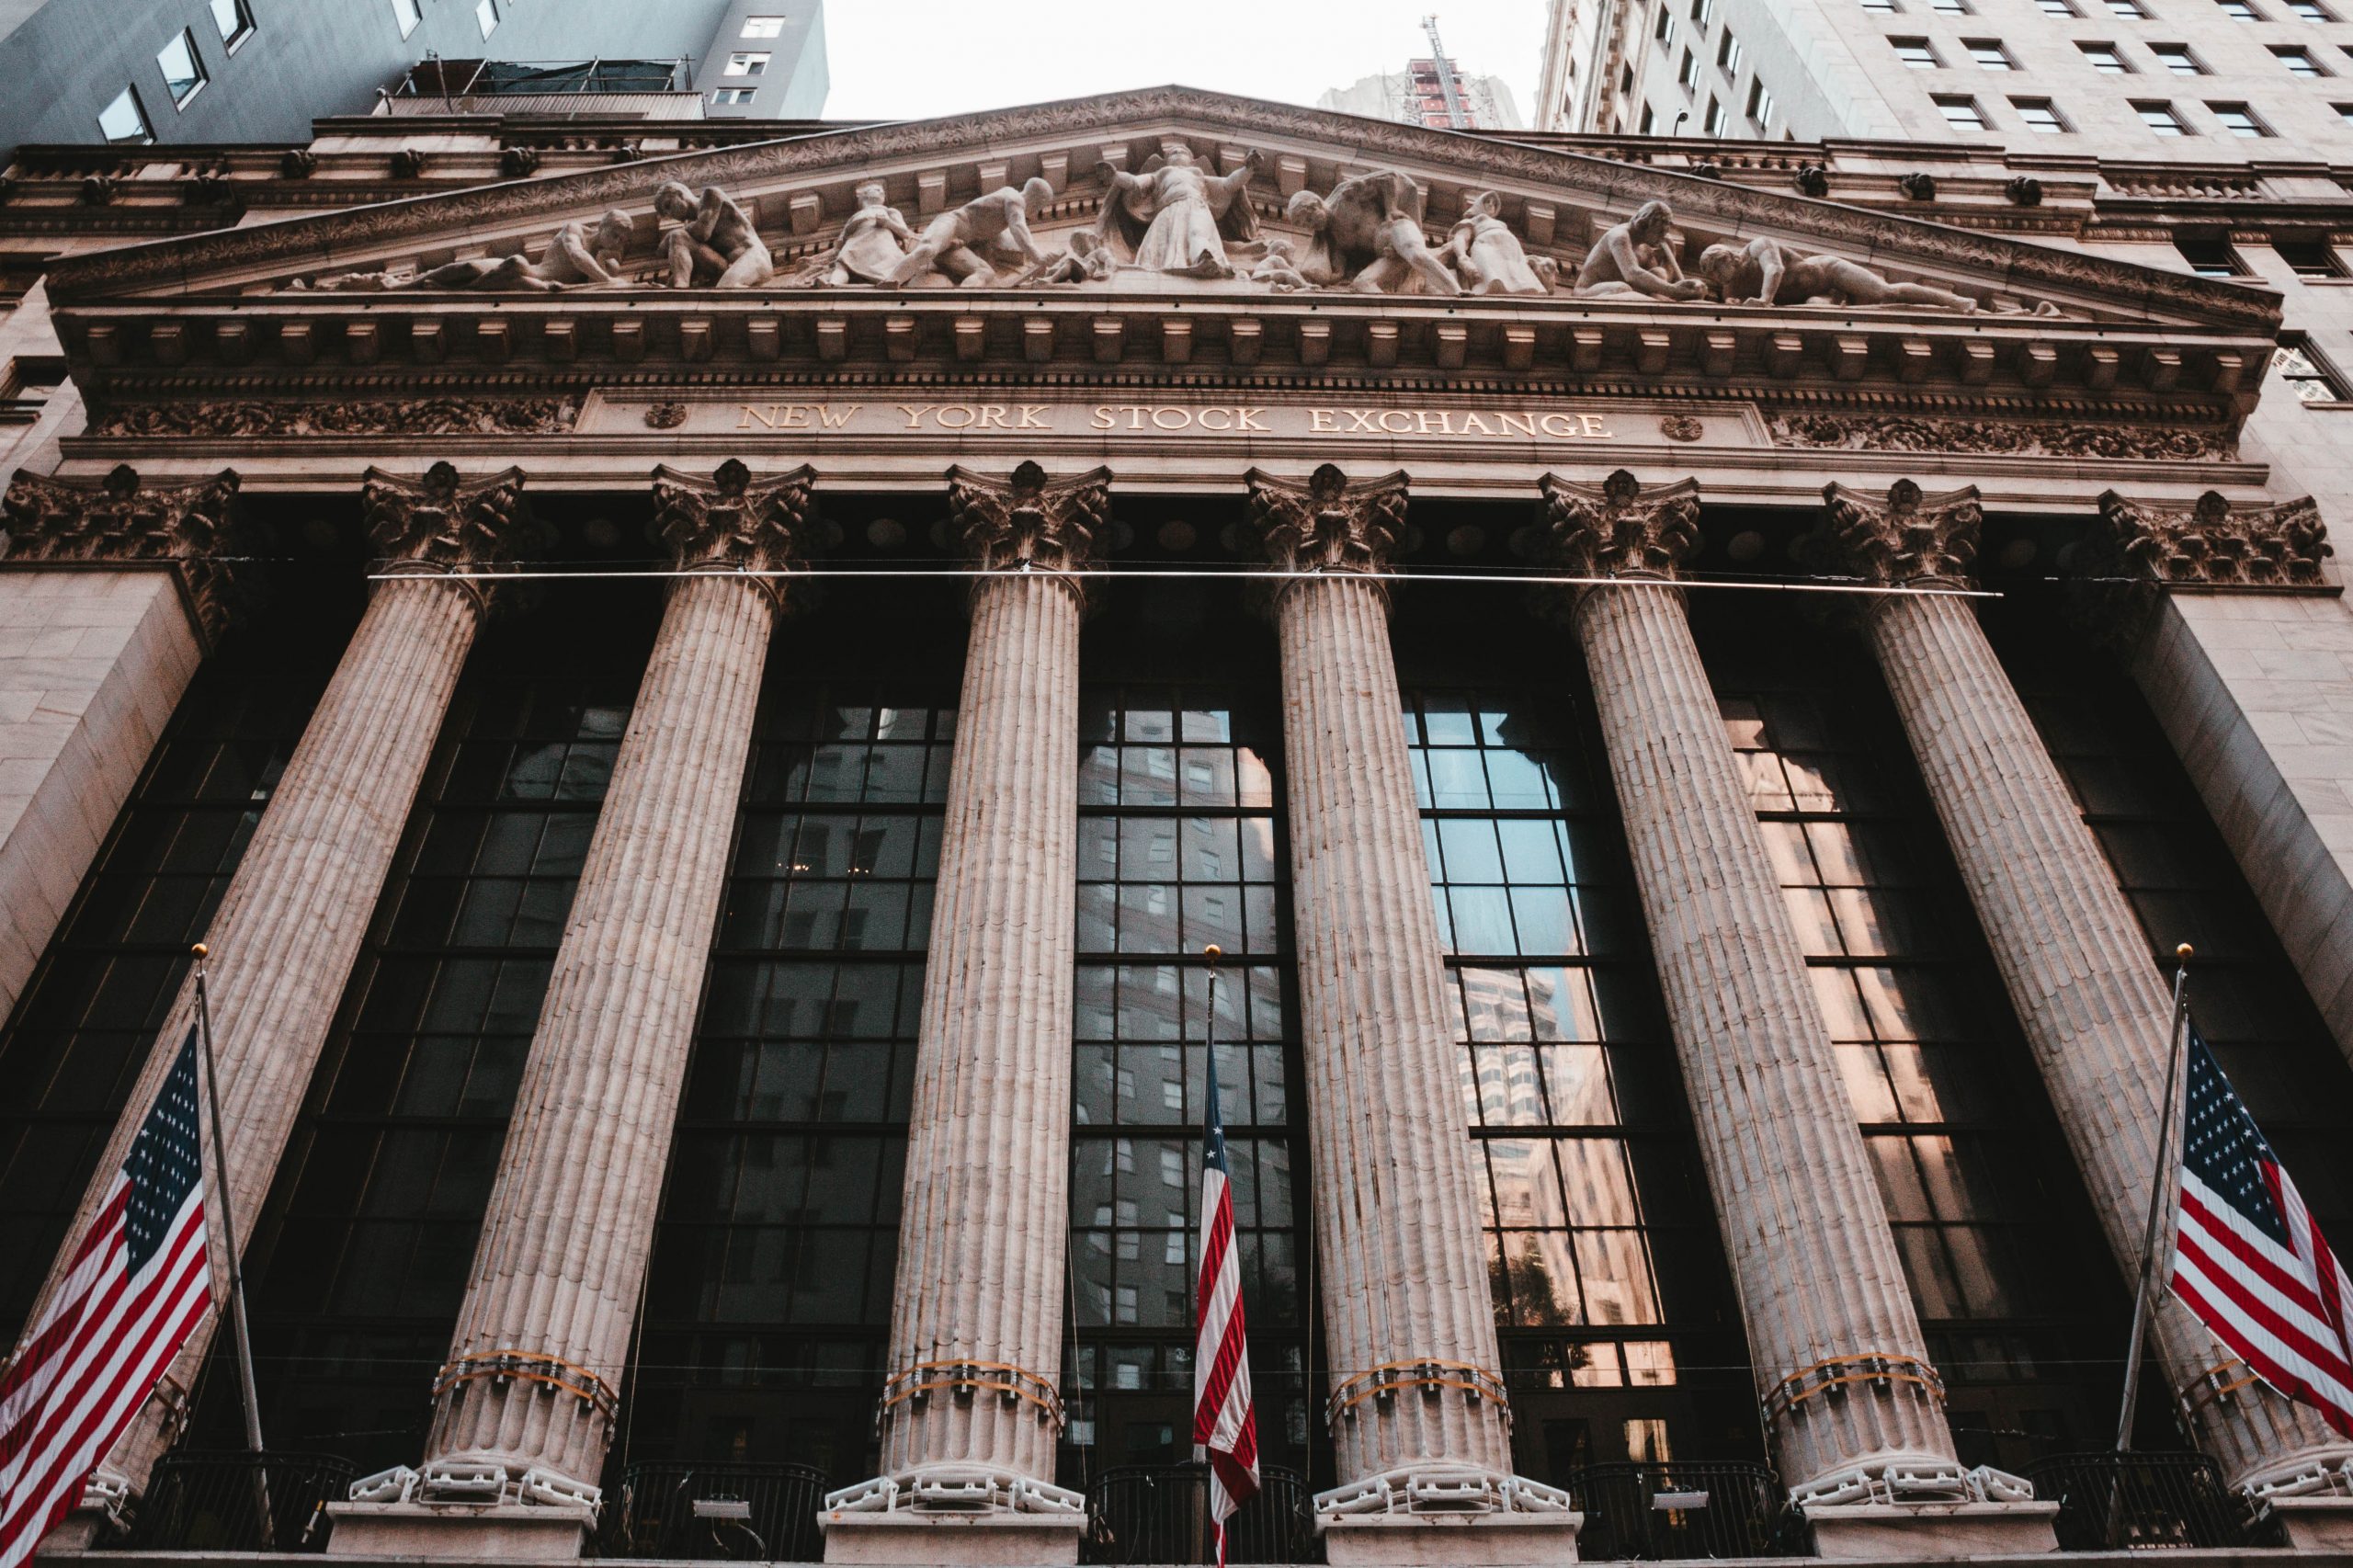 New York stock exchange on Wall Street